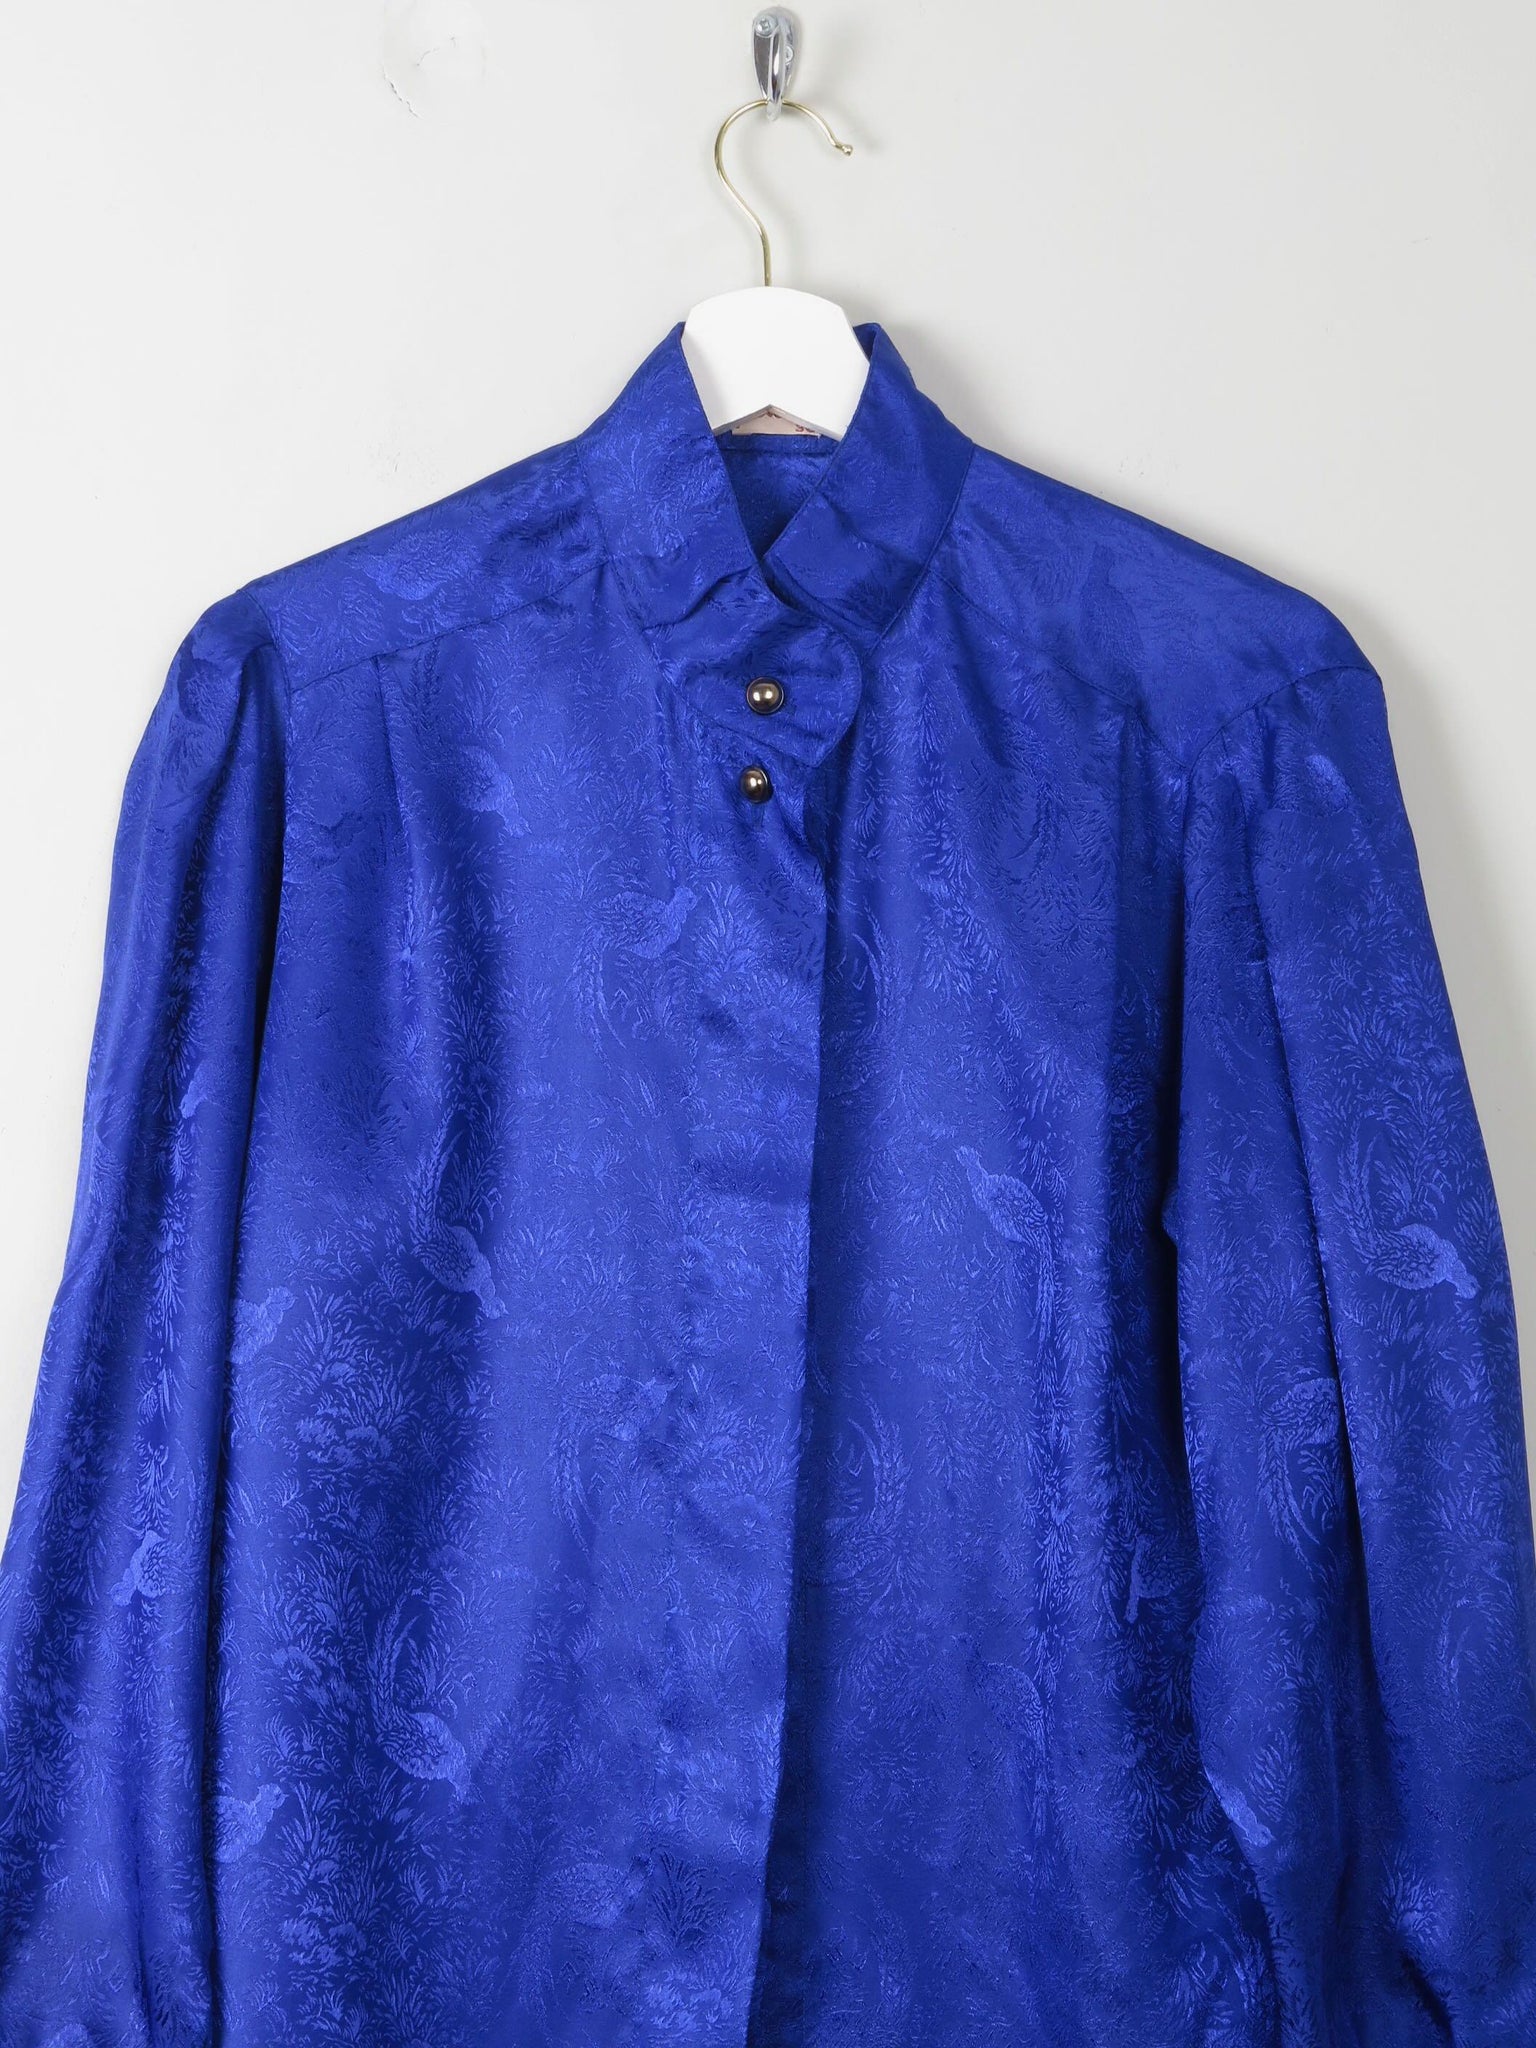 Women's Electric Blue Vintage Blouse M - The Harlequin